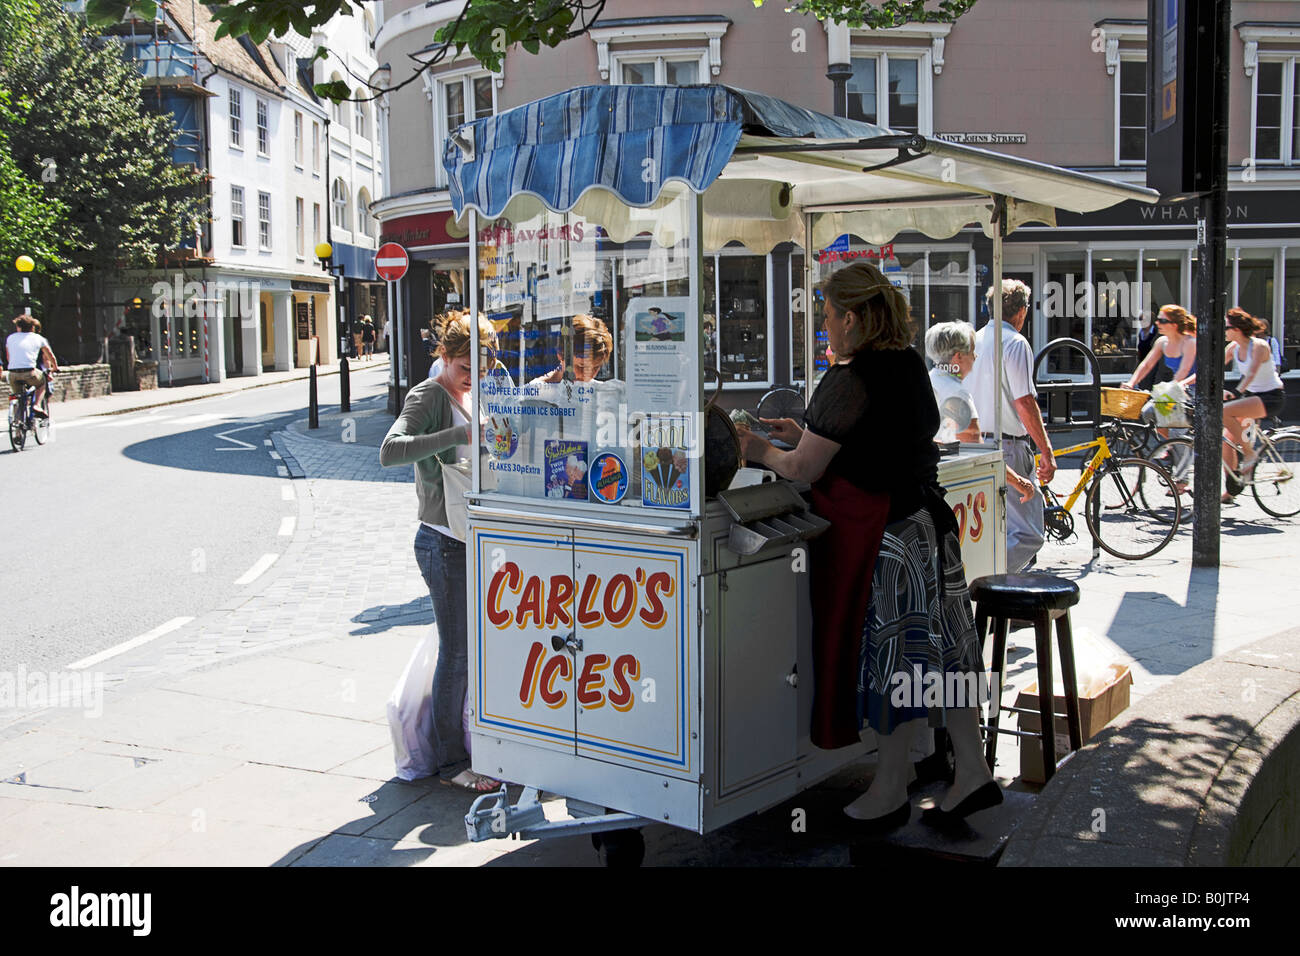 Ices for sale- Cambridge. Stock Photo